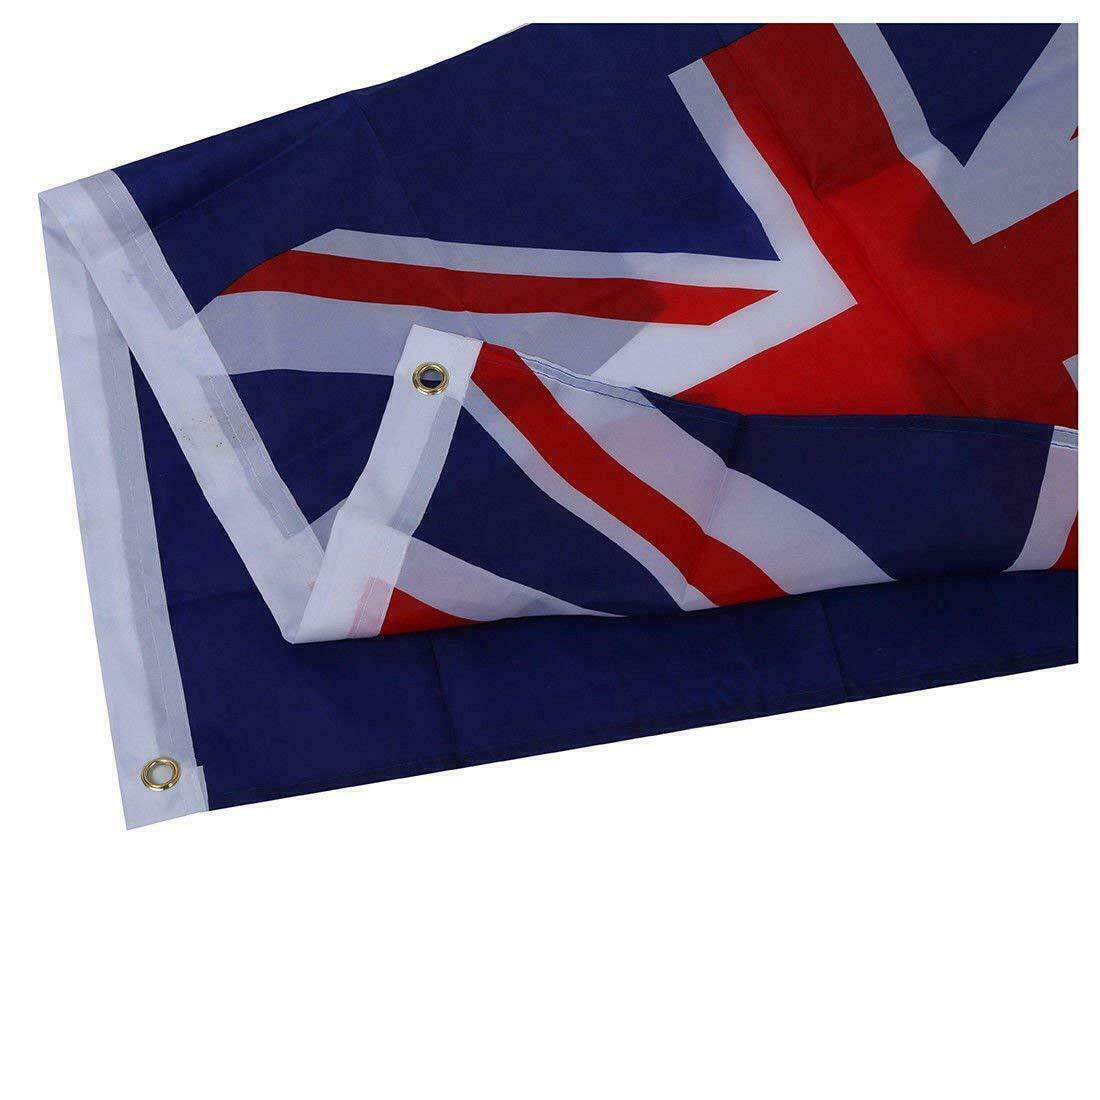 Large Oz Australian Aussie Flag Australia Day Heavy Duty Outdoor 90cm x 180cm